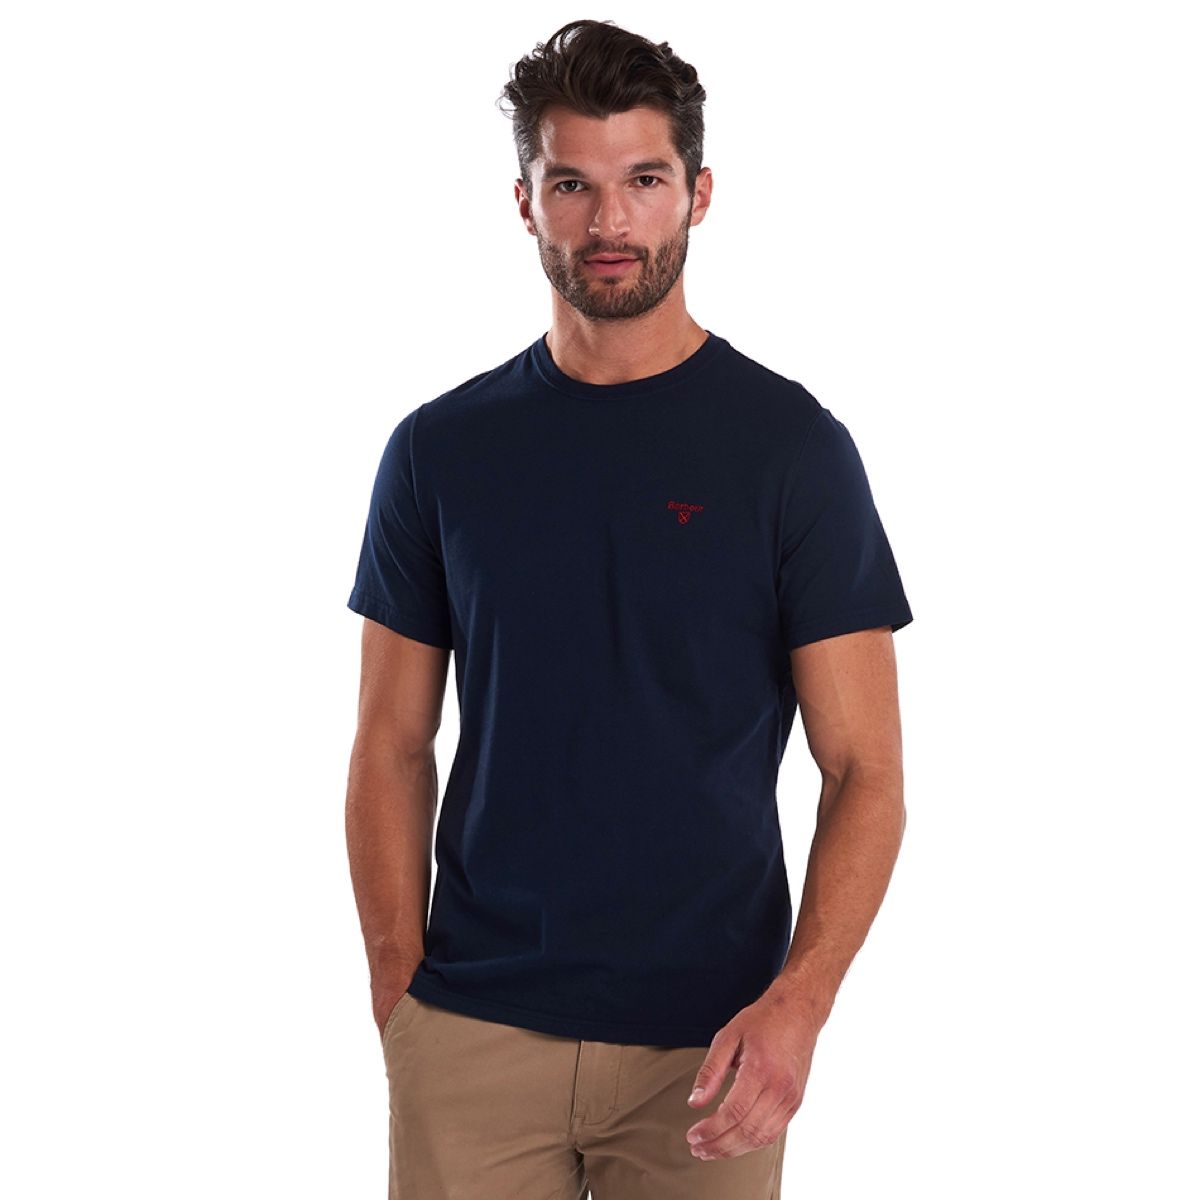 Barbour Men's Sports T-Shirt | Navy